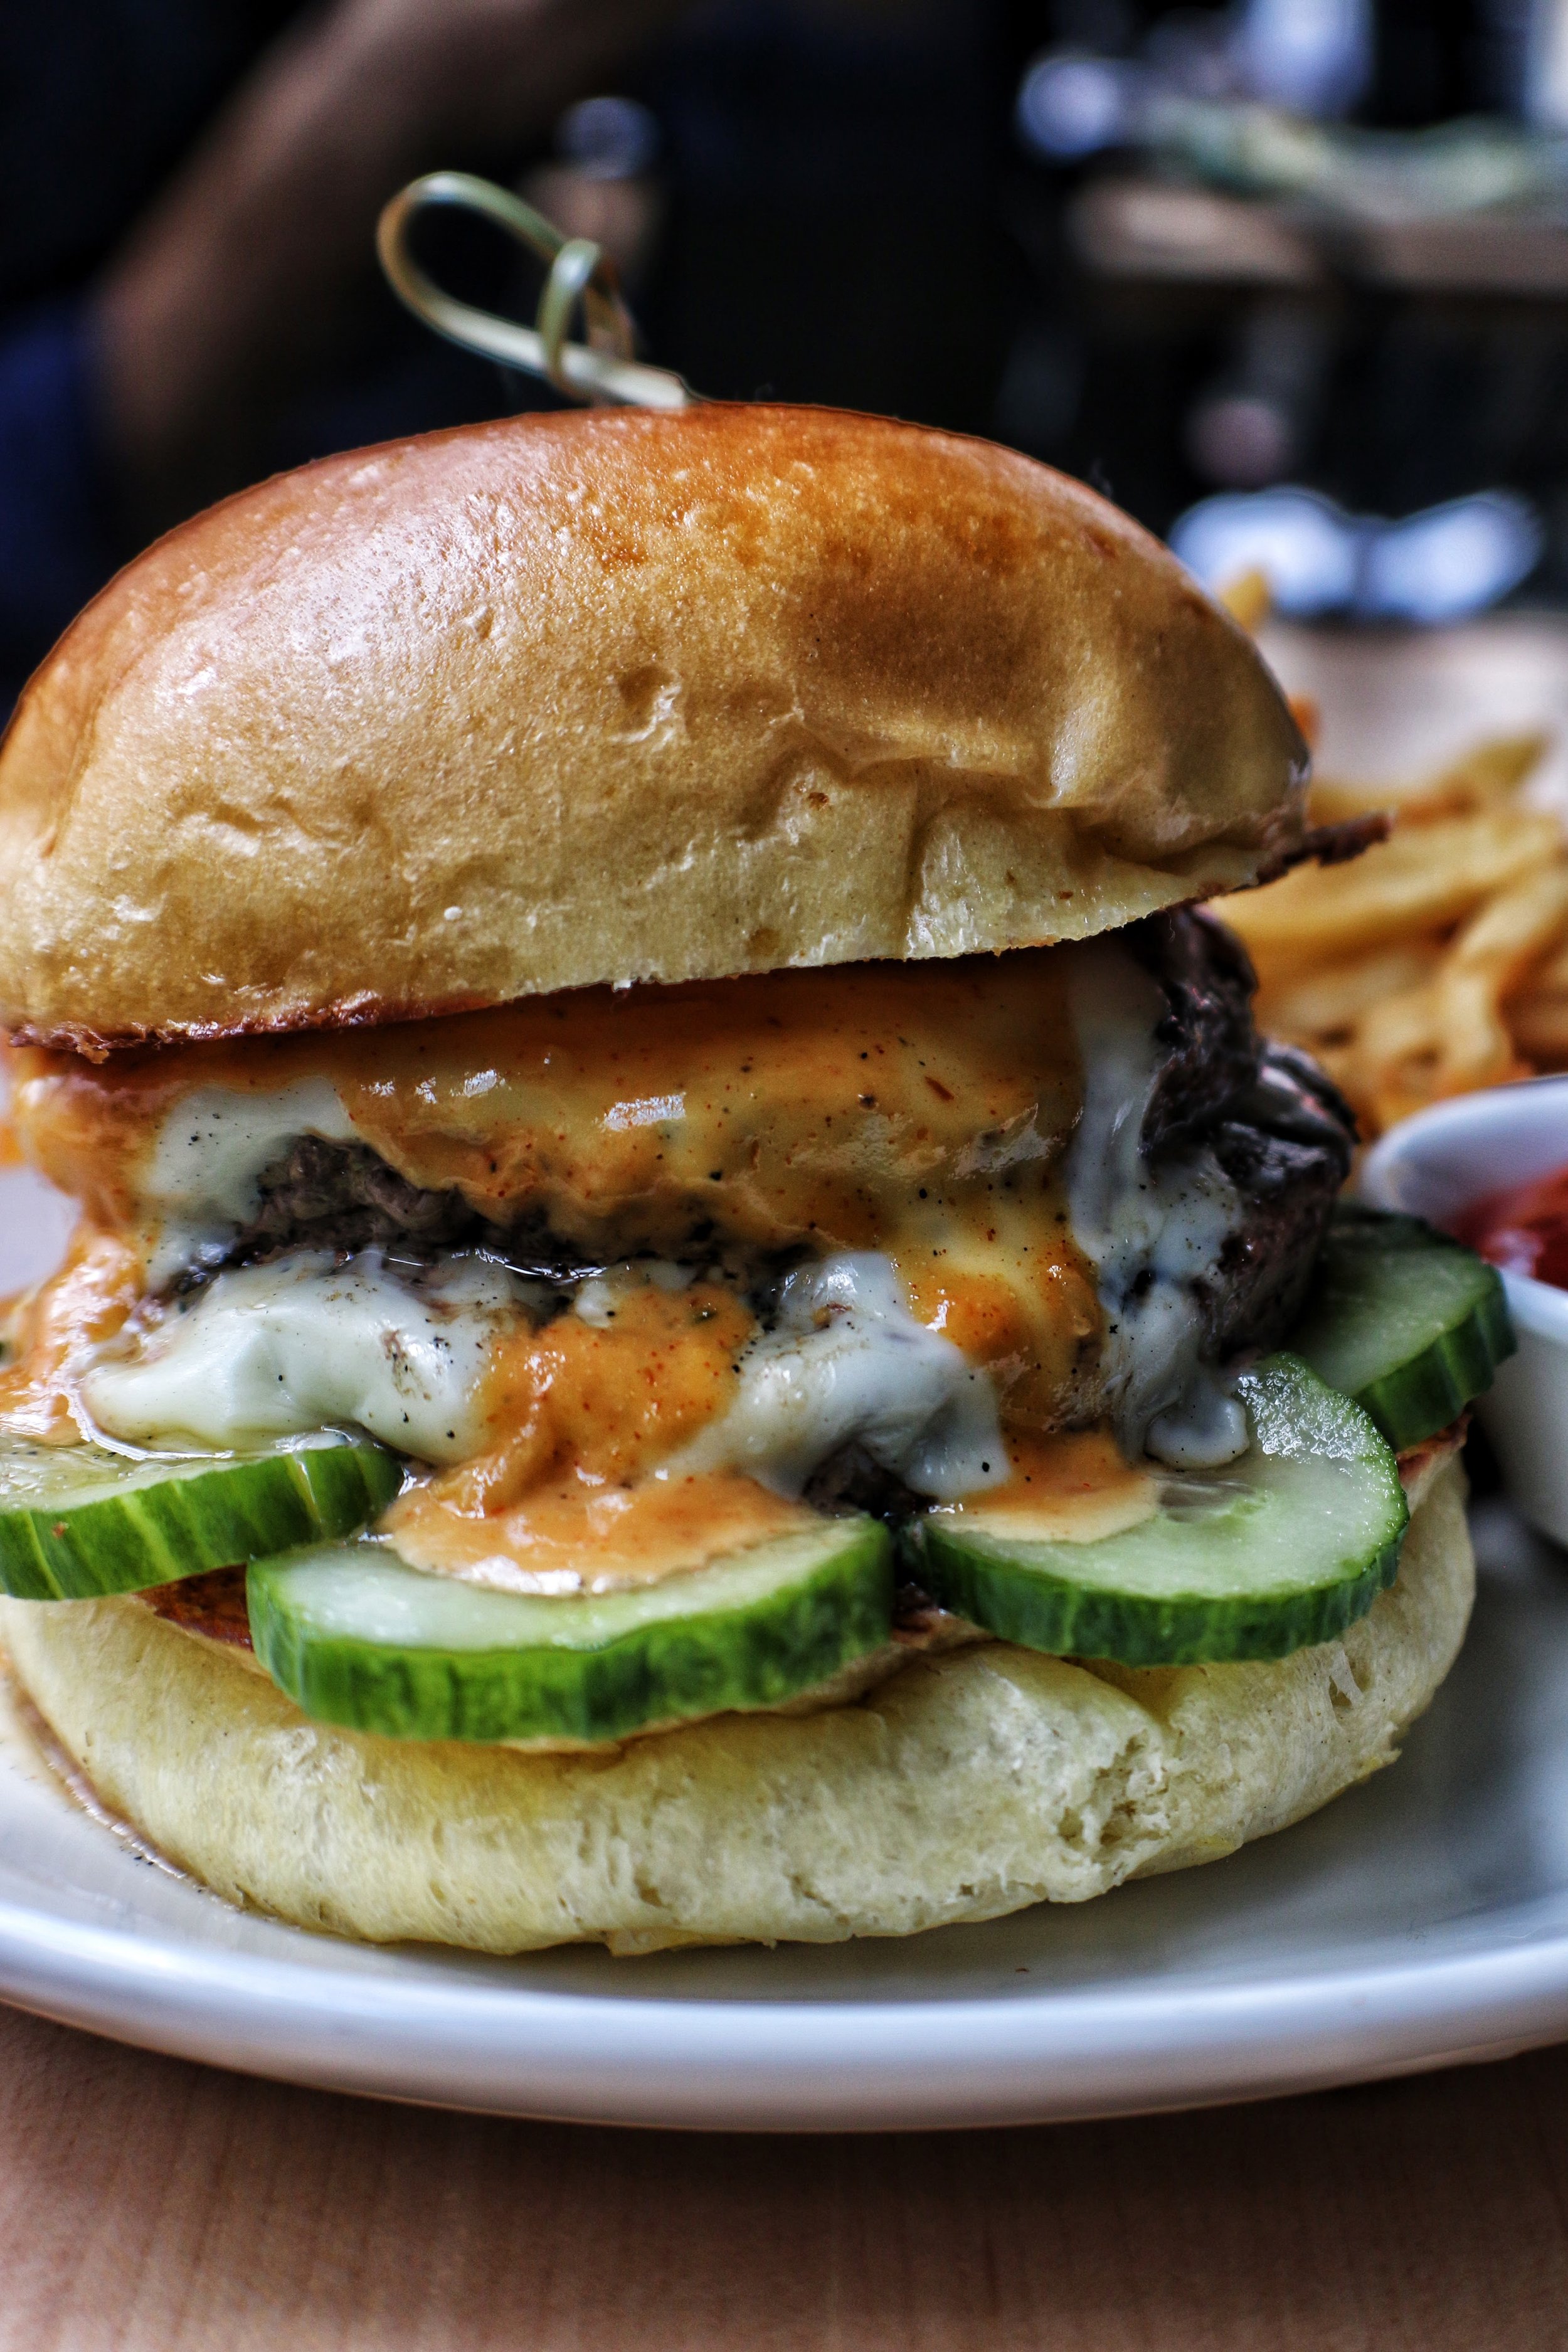  Bleecker Burger, Double Patty, Potato Roll, Secret Sauce, House Pickles &amp; Fries 